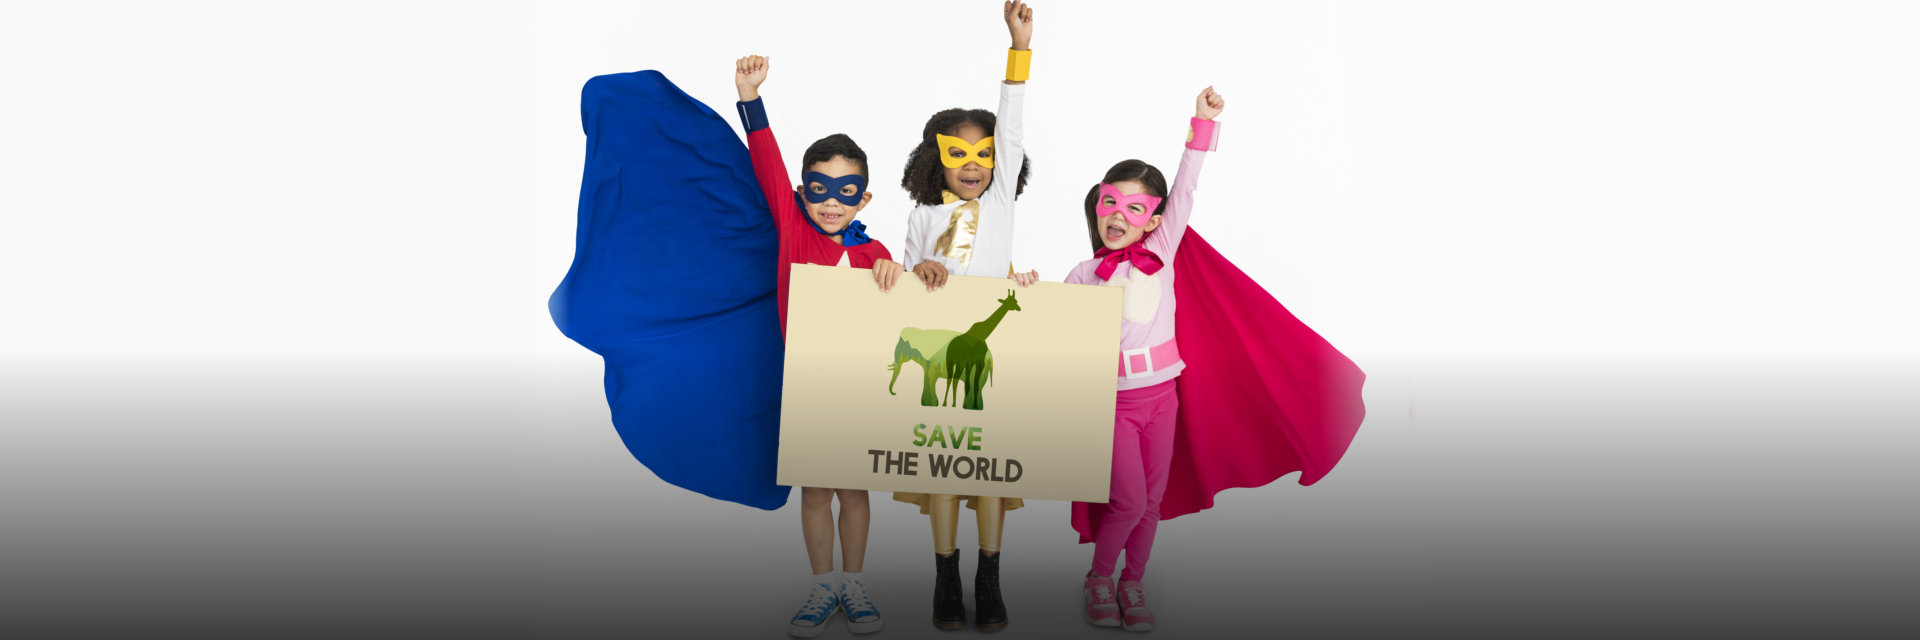 kids wearing superhero costumes